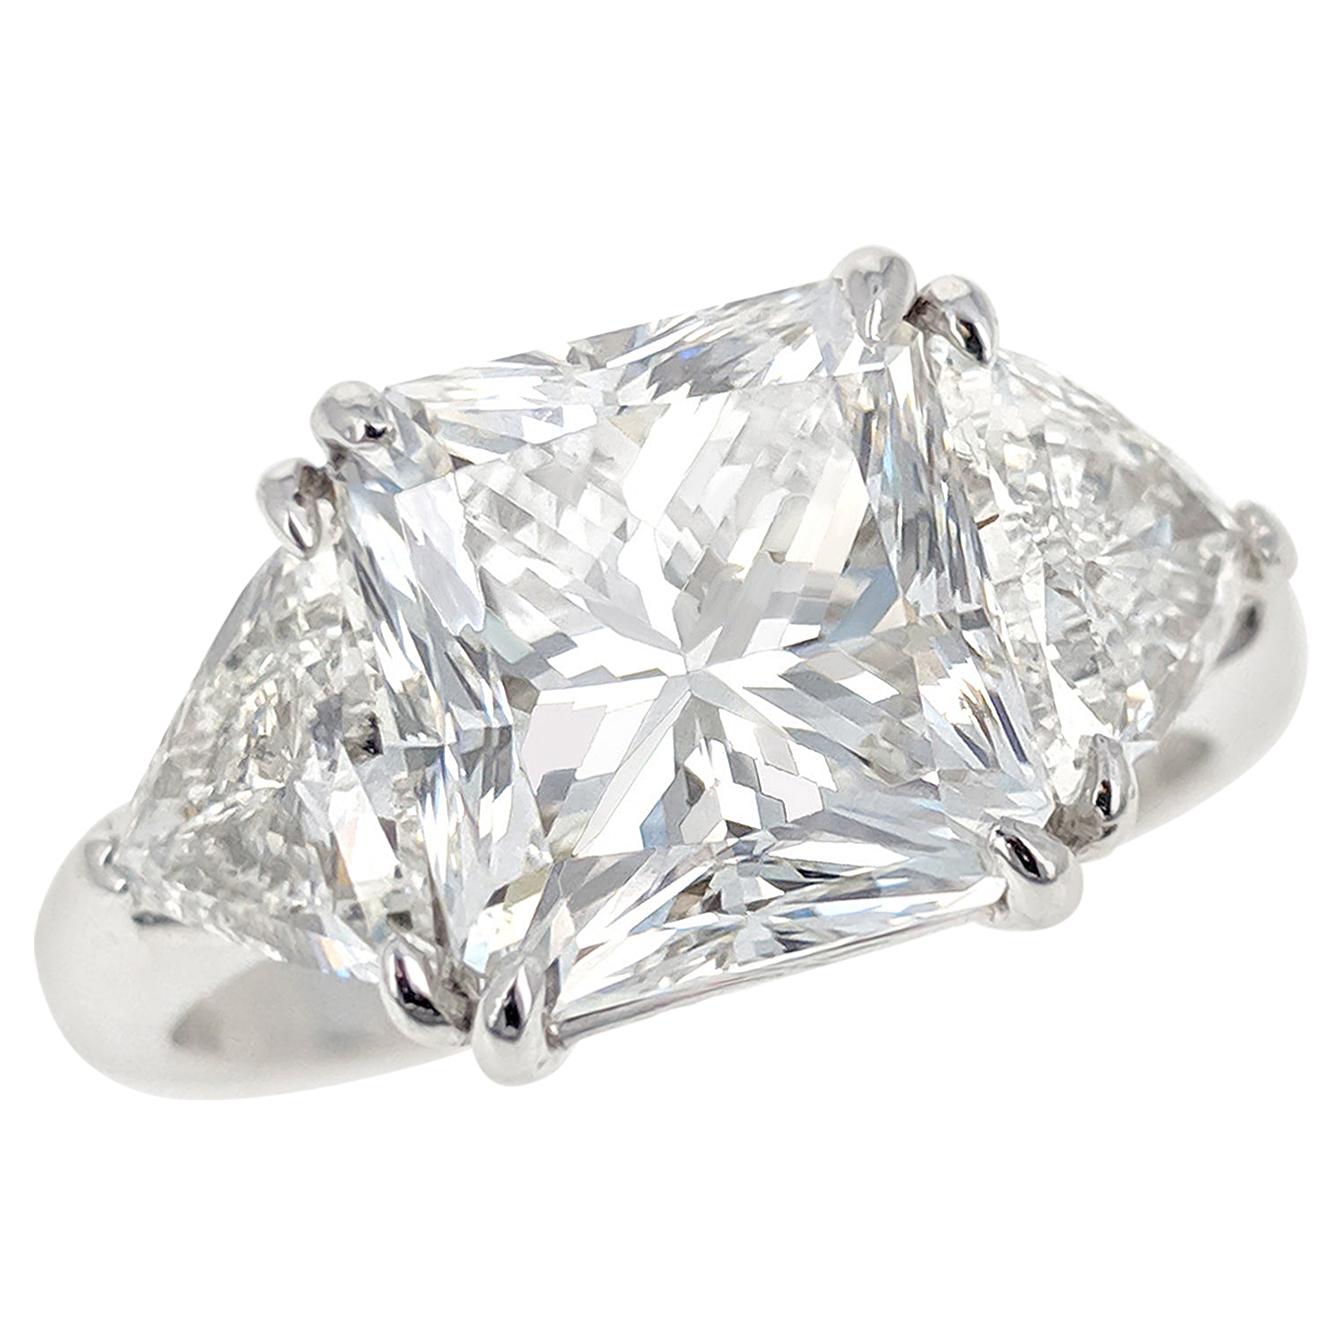 4.03 Carat Radiant Cut Diamond Ring GIA I SI1